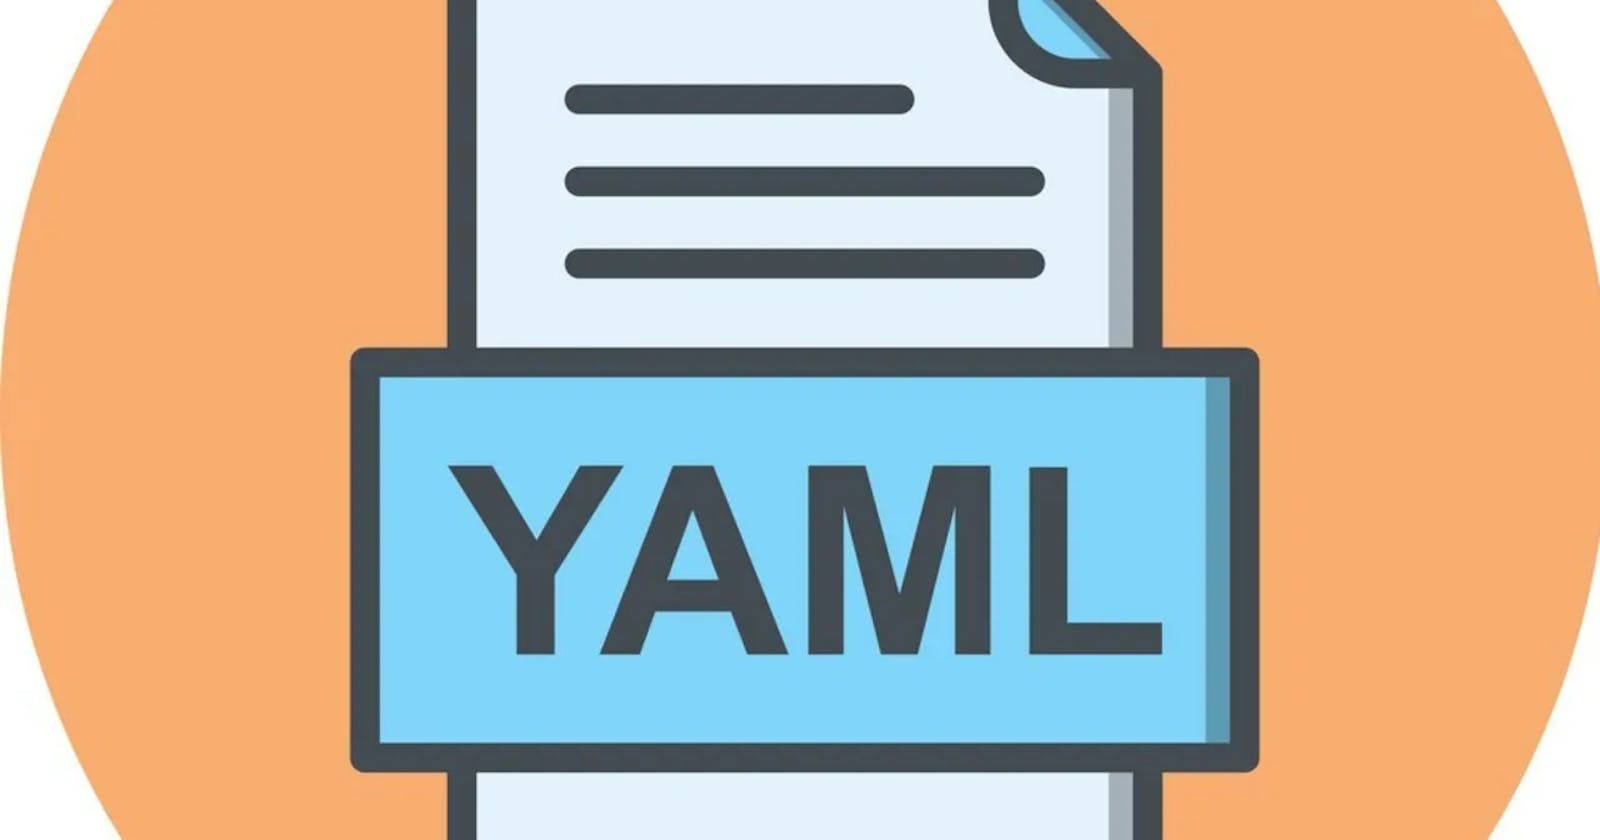 YAML - from basics to advanced